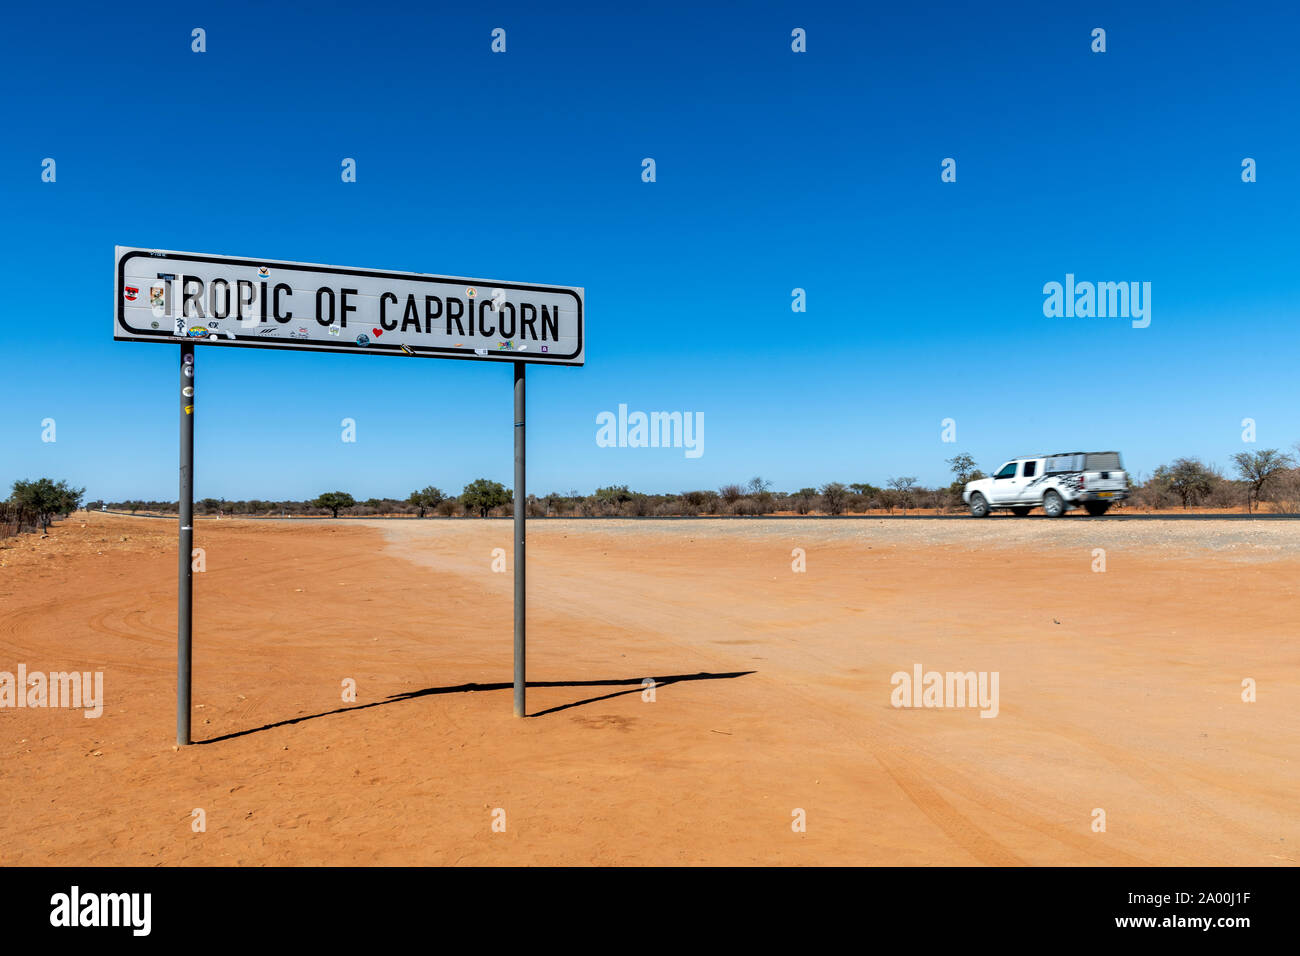 Tropic of Capricorn road sign, Namibia Stock Photo